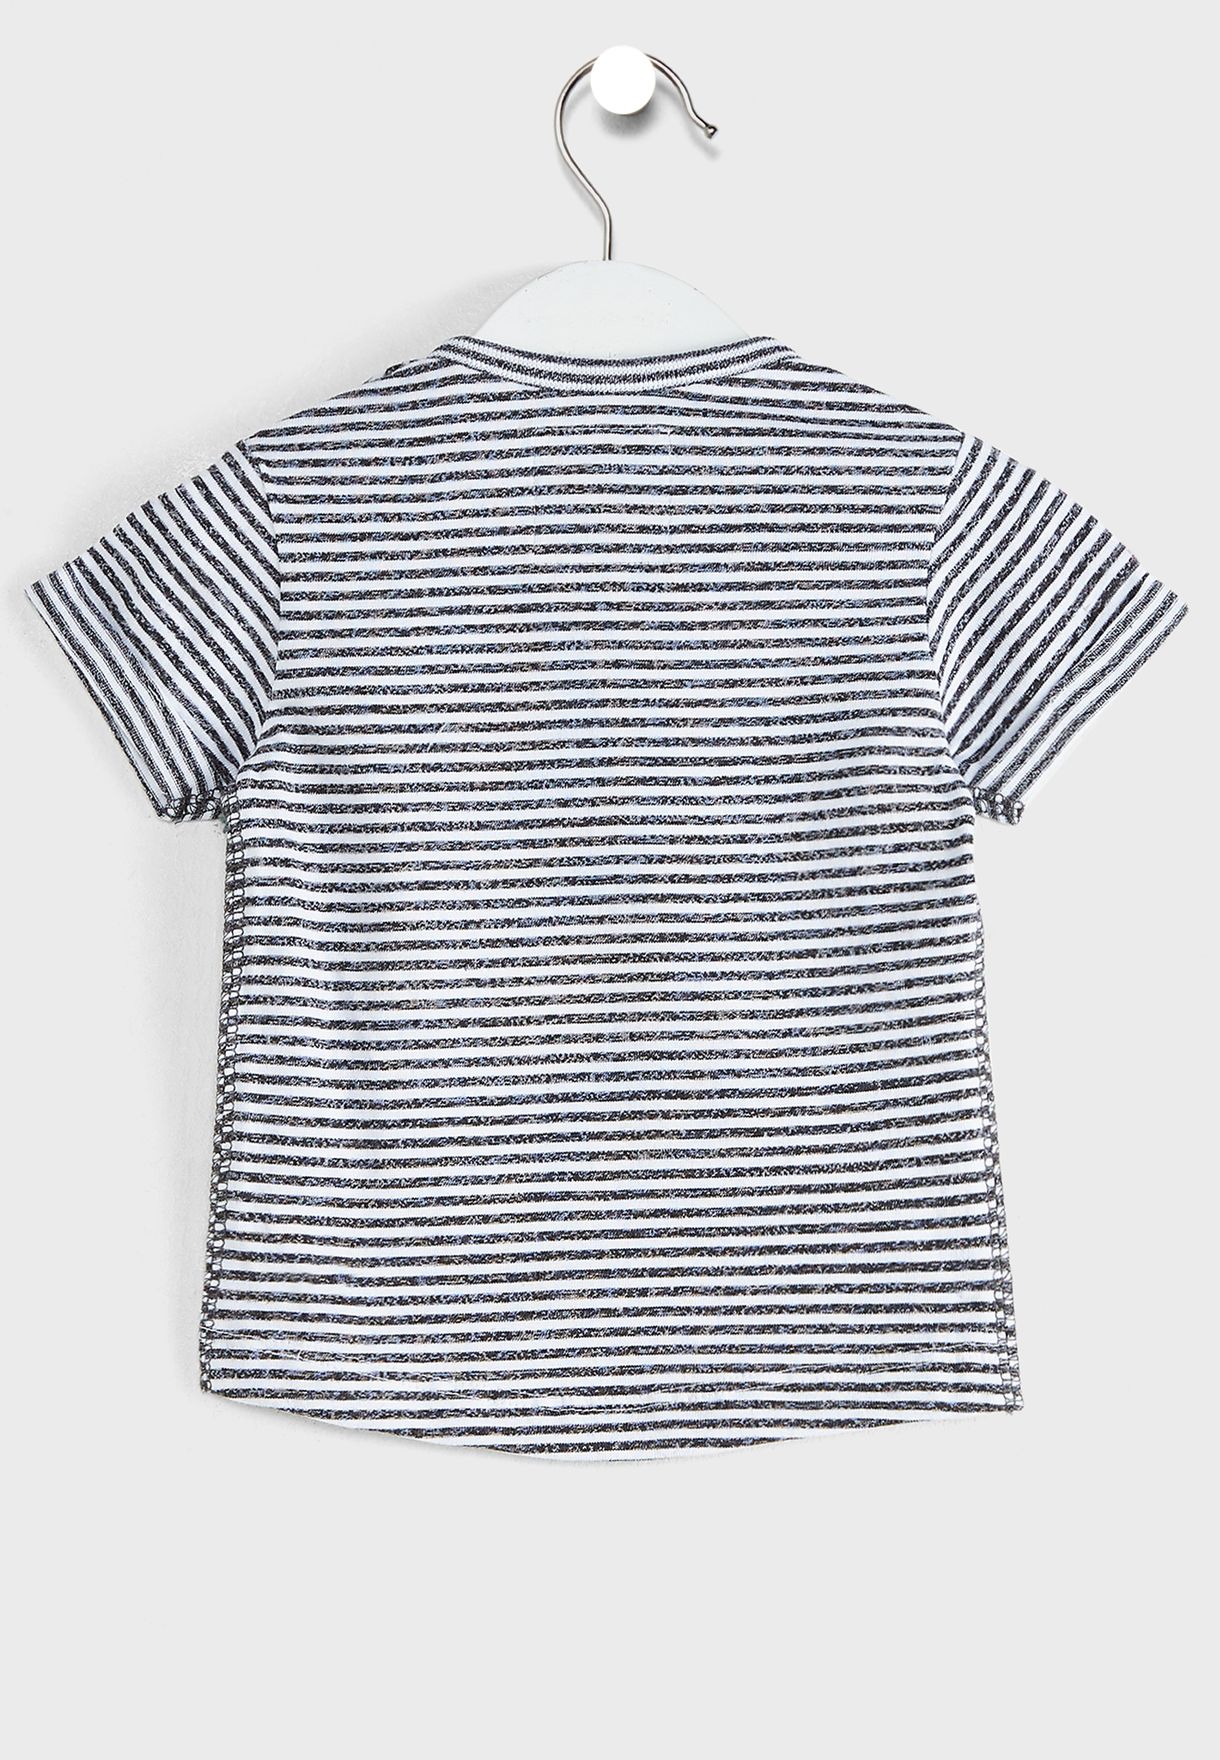 Kids Striped T-Shirt